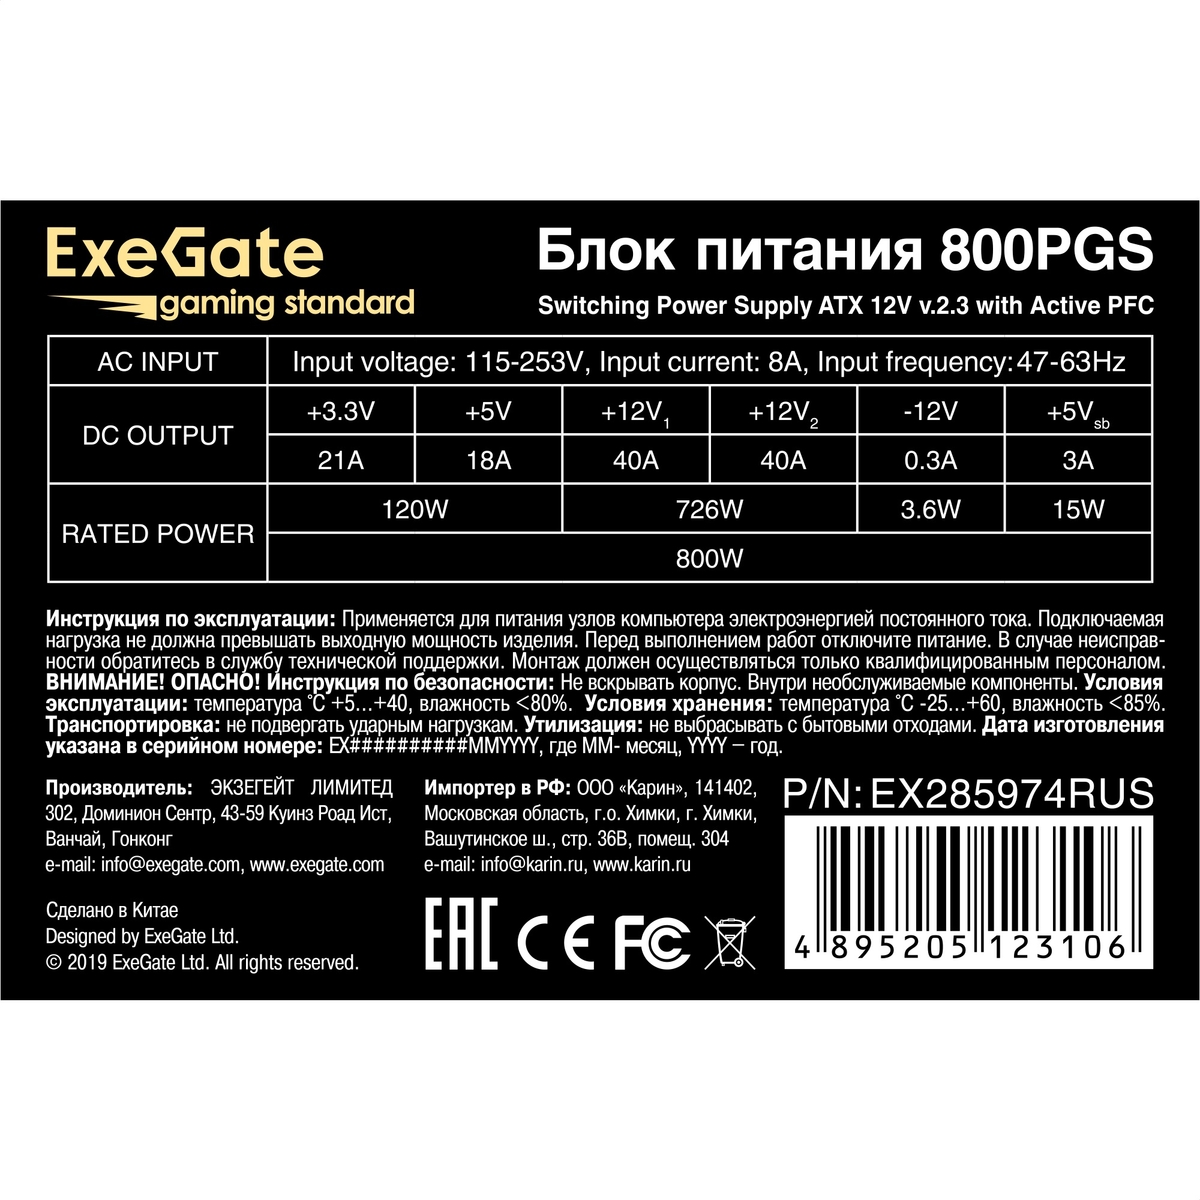 PSU 800W ExeGate Gaming Standard 800PGS